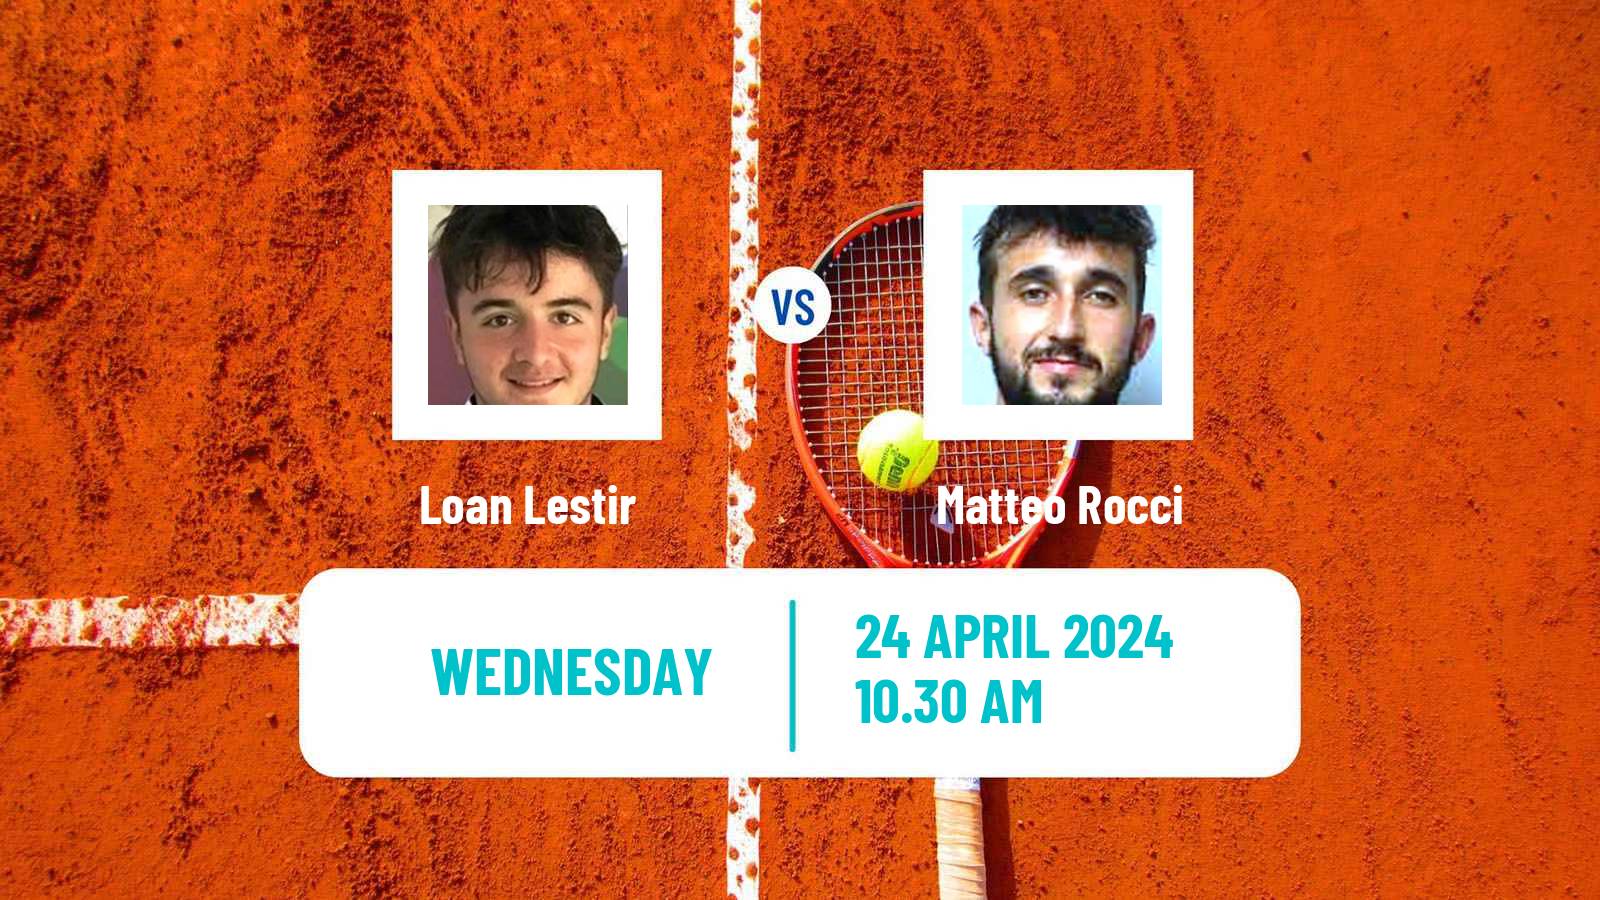 Tennis ITF M15 Monastir 17 Men Loan Lestir - Matteo Rocci